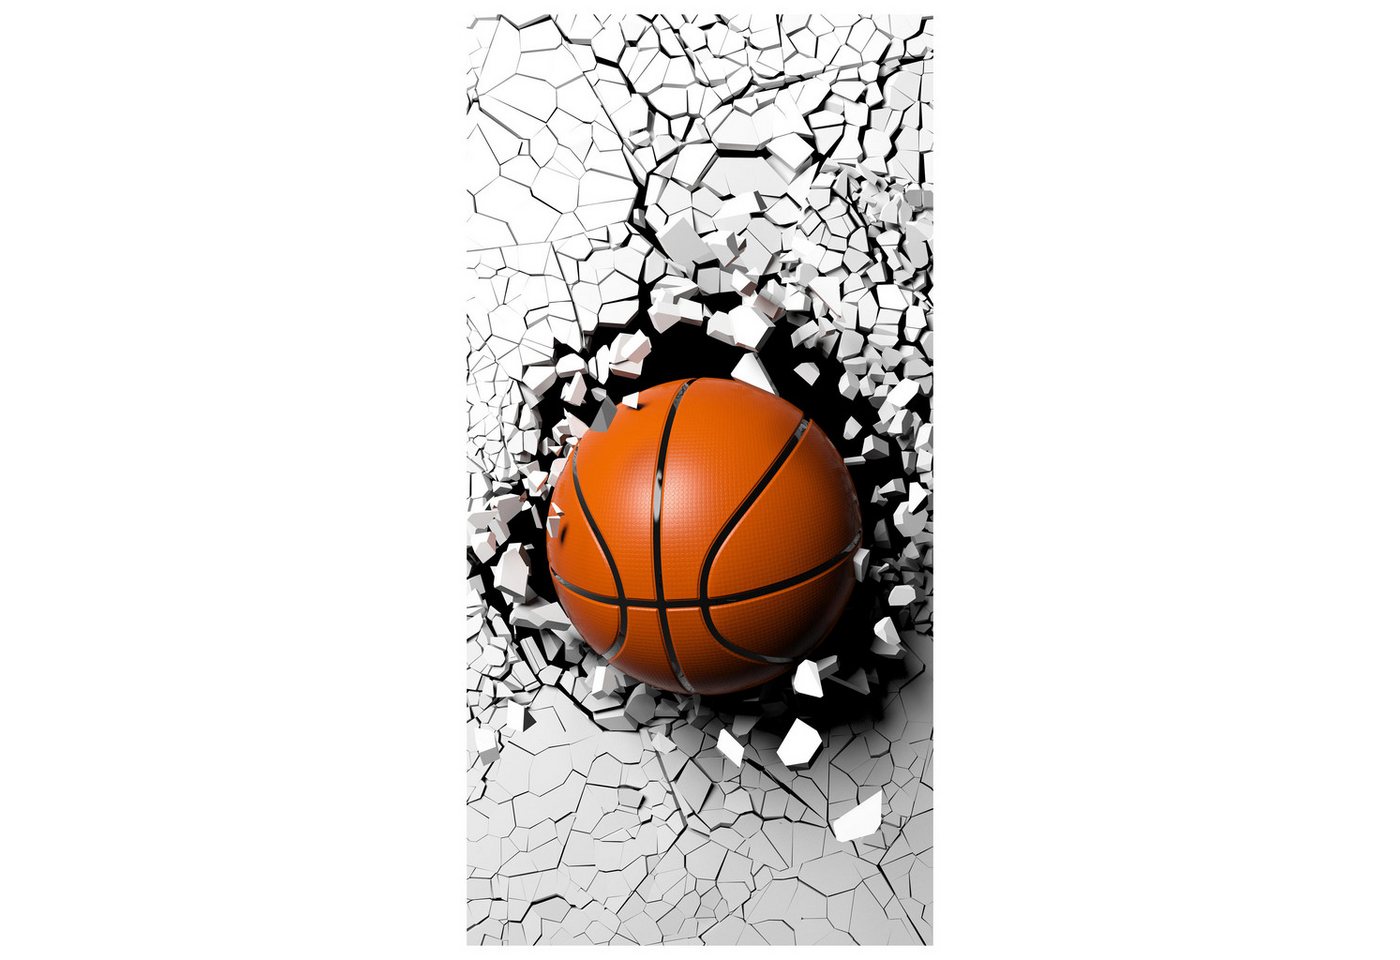 wandmotiv24 Türtapete Basketball durch Wand, 3D, Sport, Ball, strukturiert, Fototapete, Wandtapete, Motivtapete, matt, selbstklebende Vinyltapete von wandmotiv24